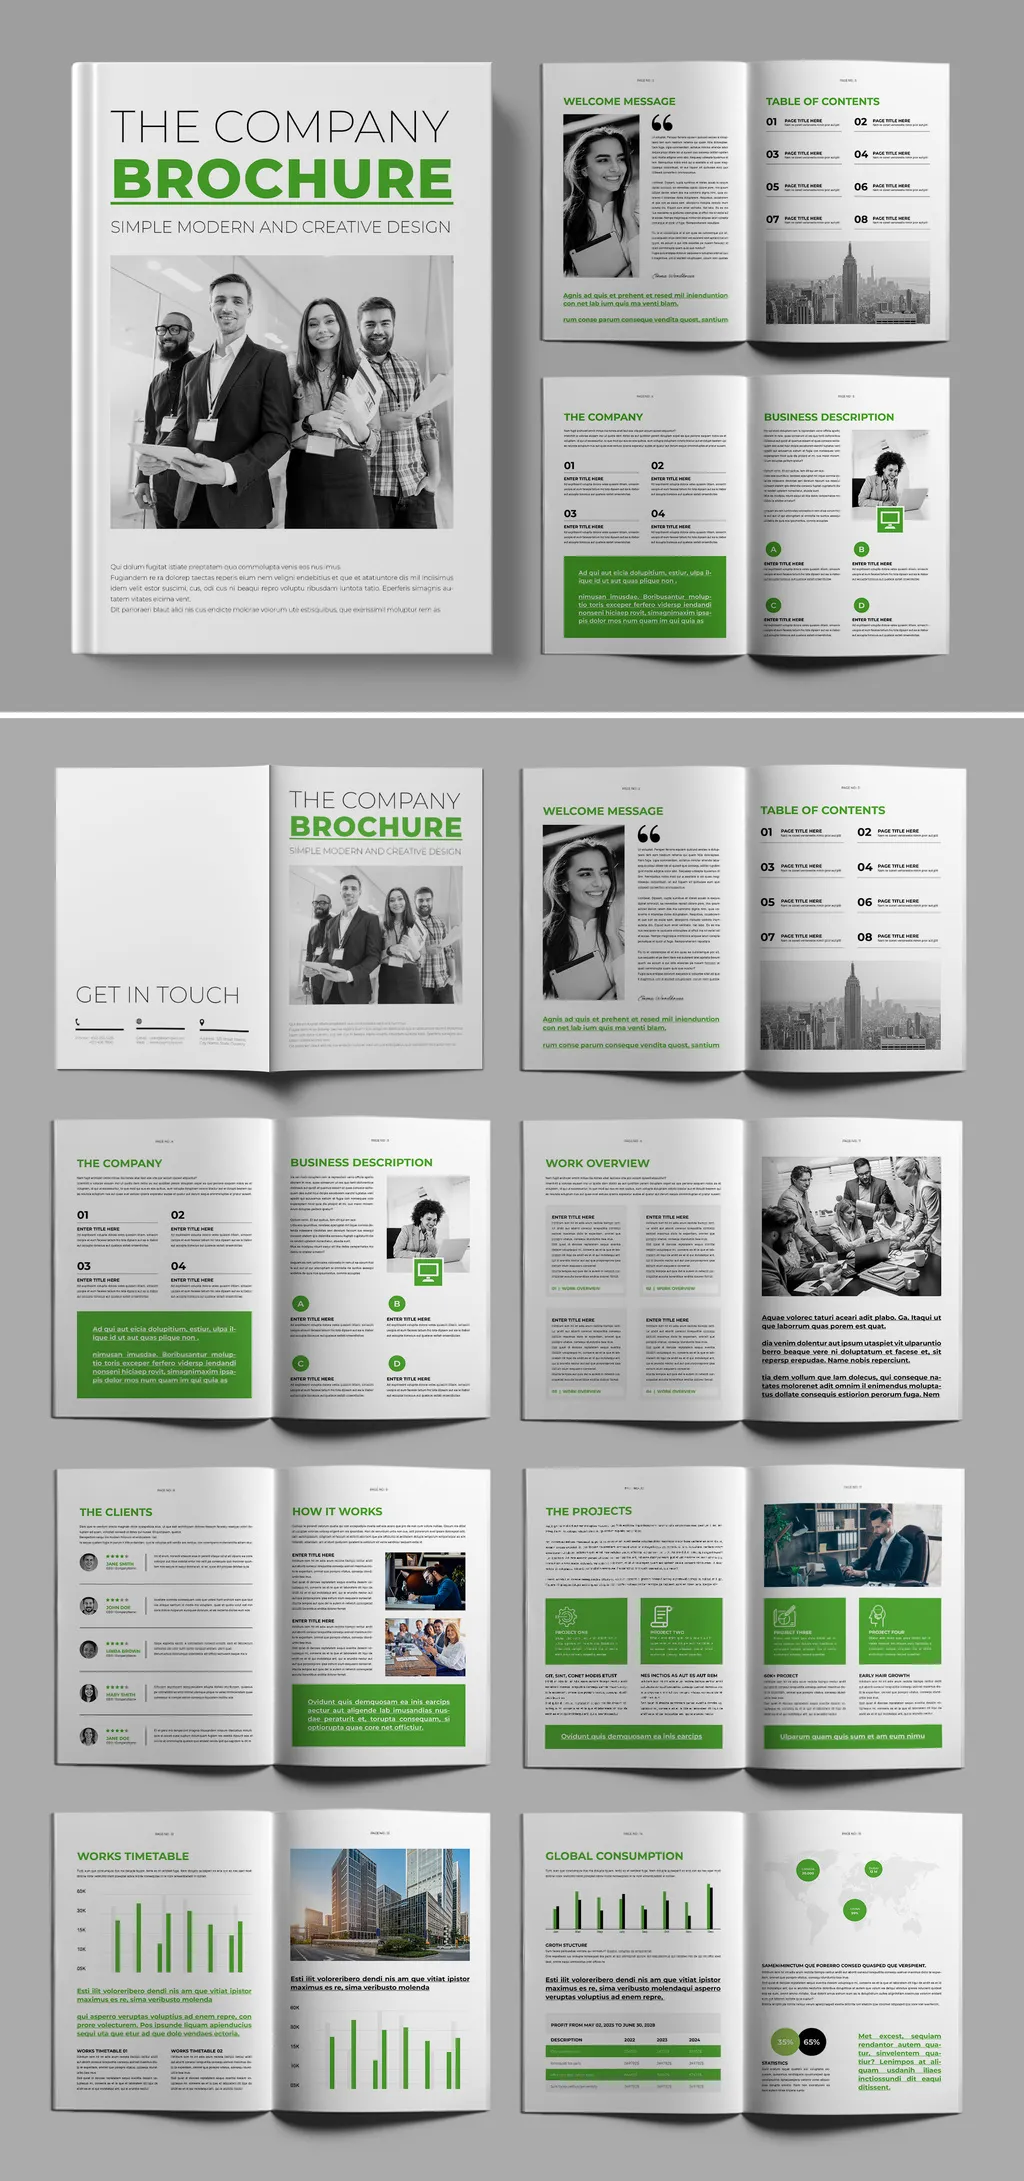 Adobestock - Company Brochure 759672160